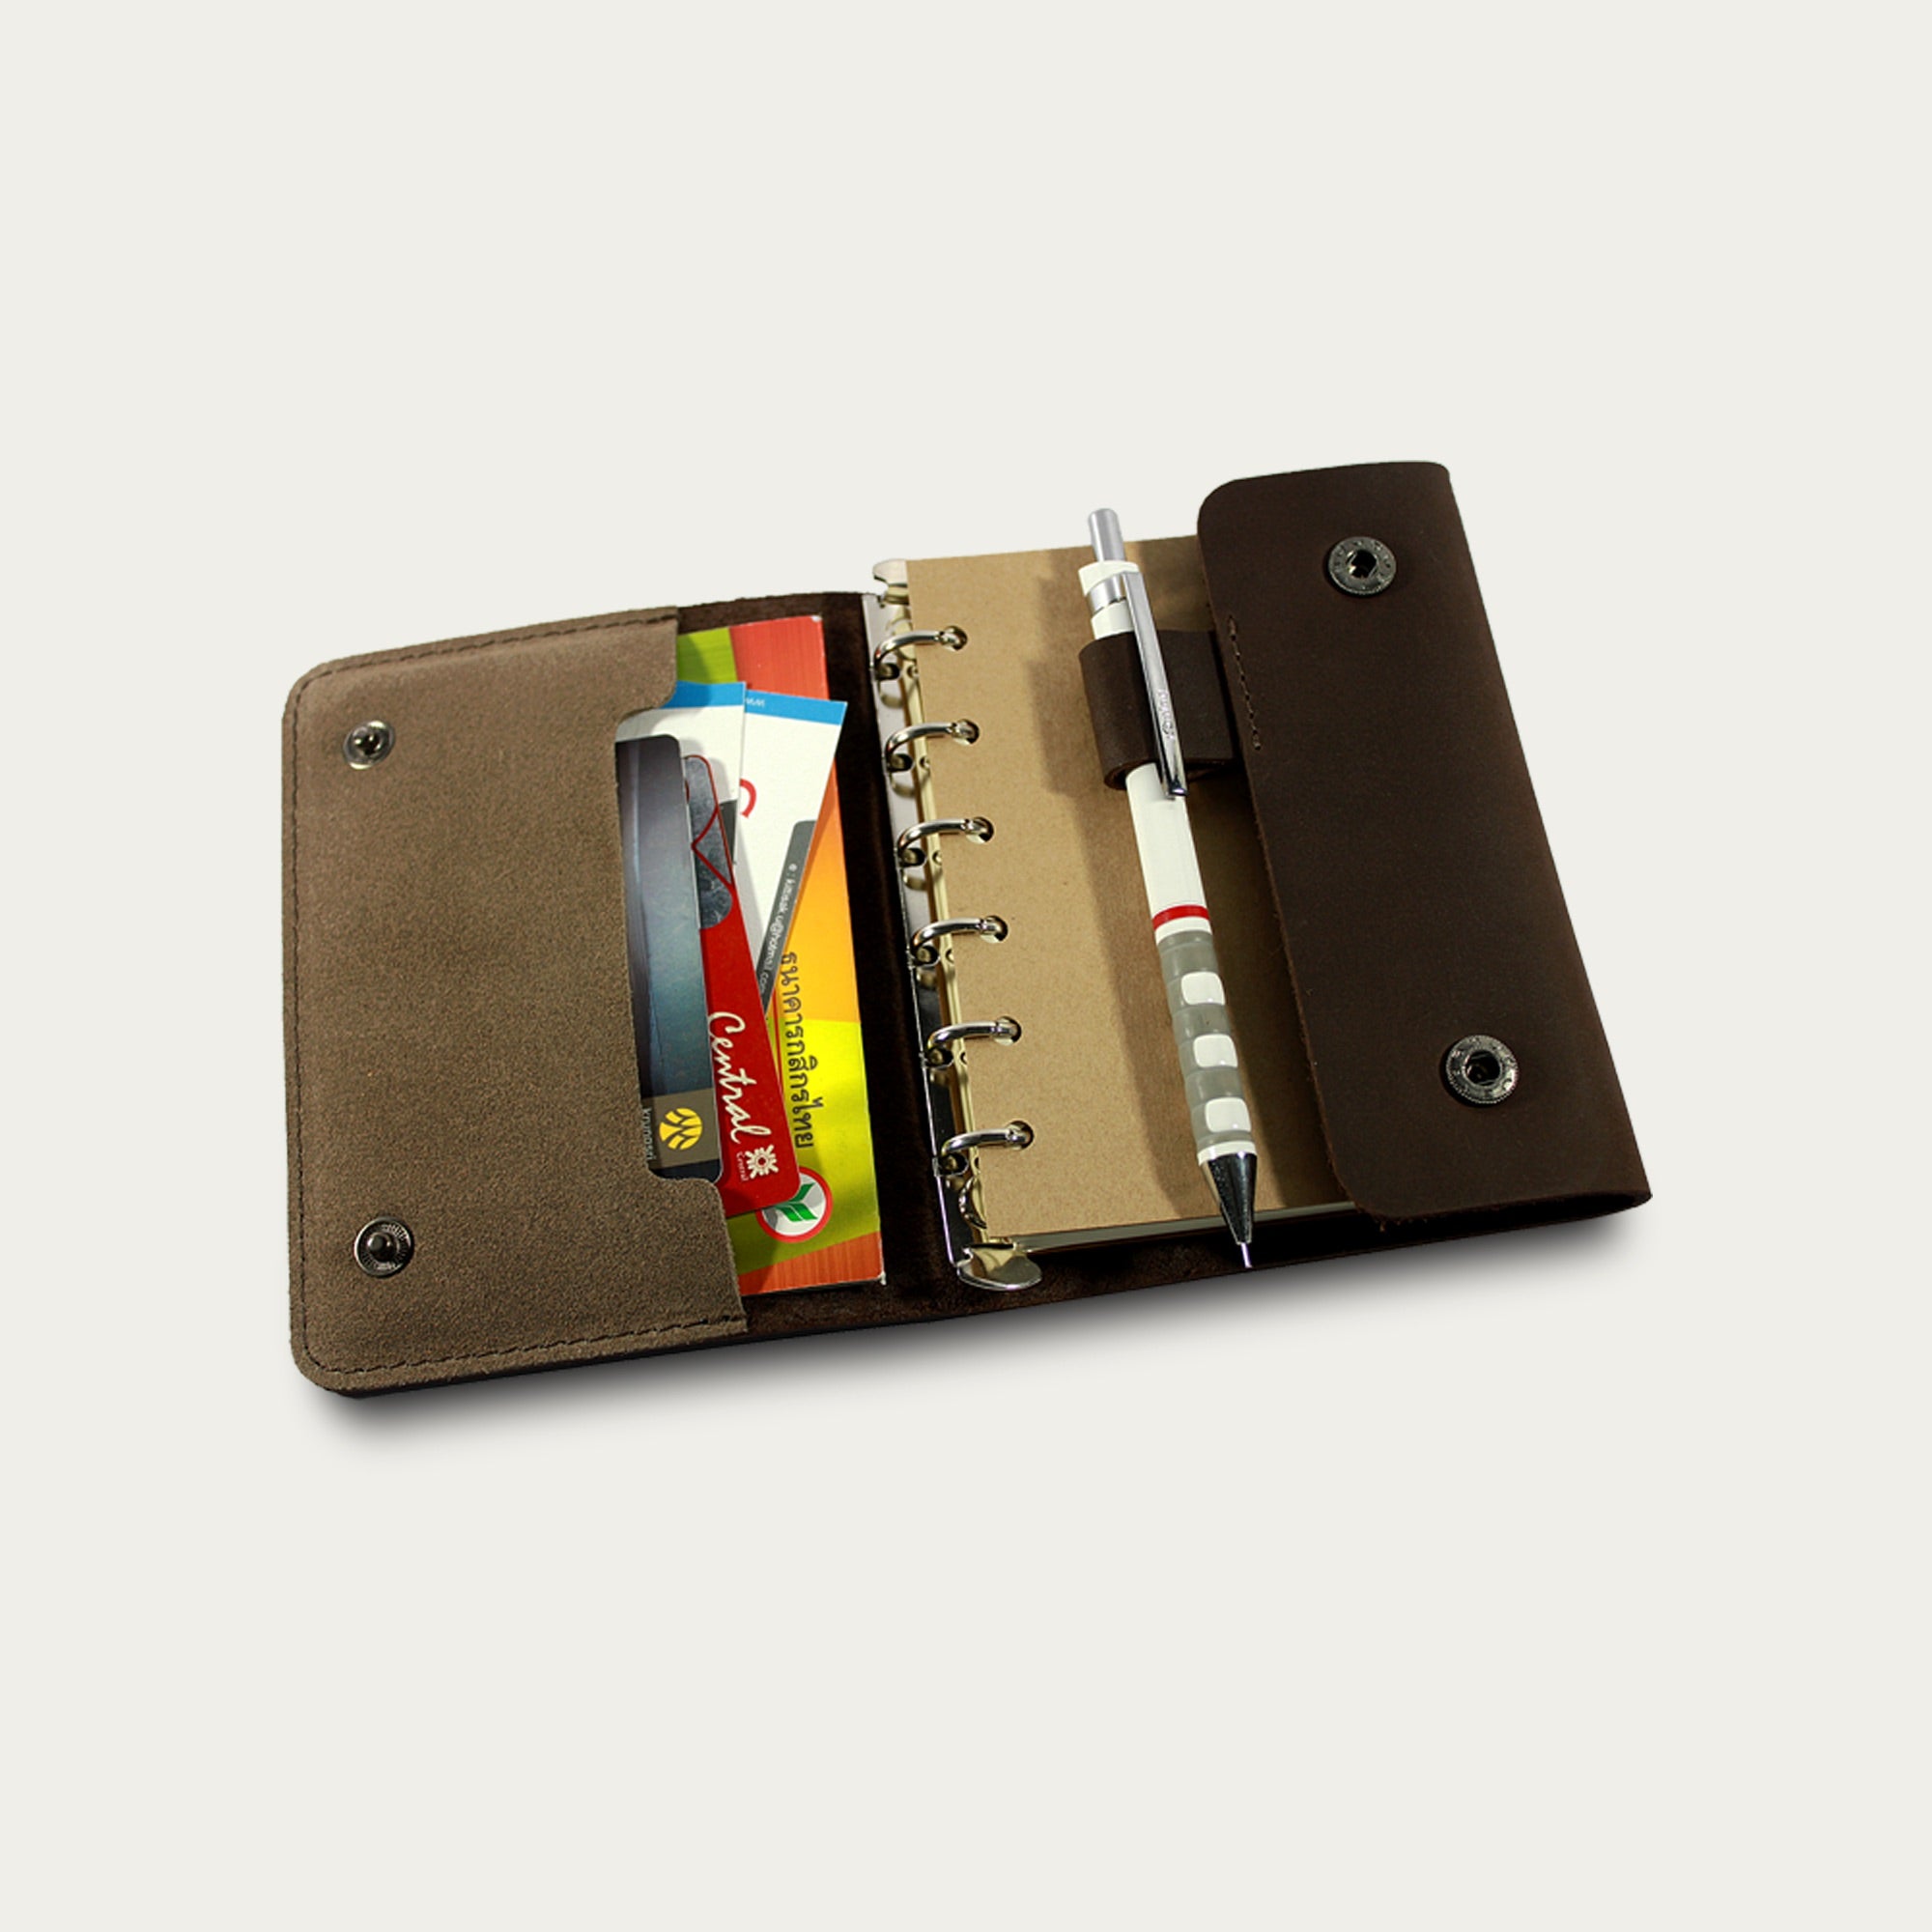 Tortoni Notebook (S) B7 | 2 Colors